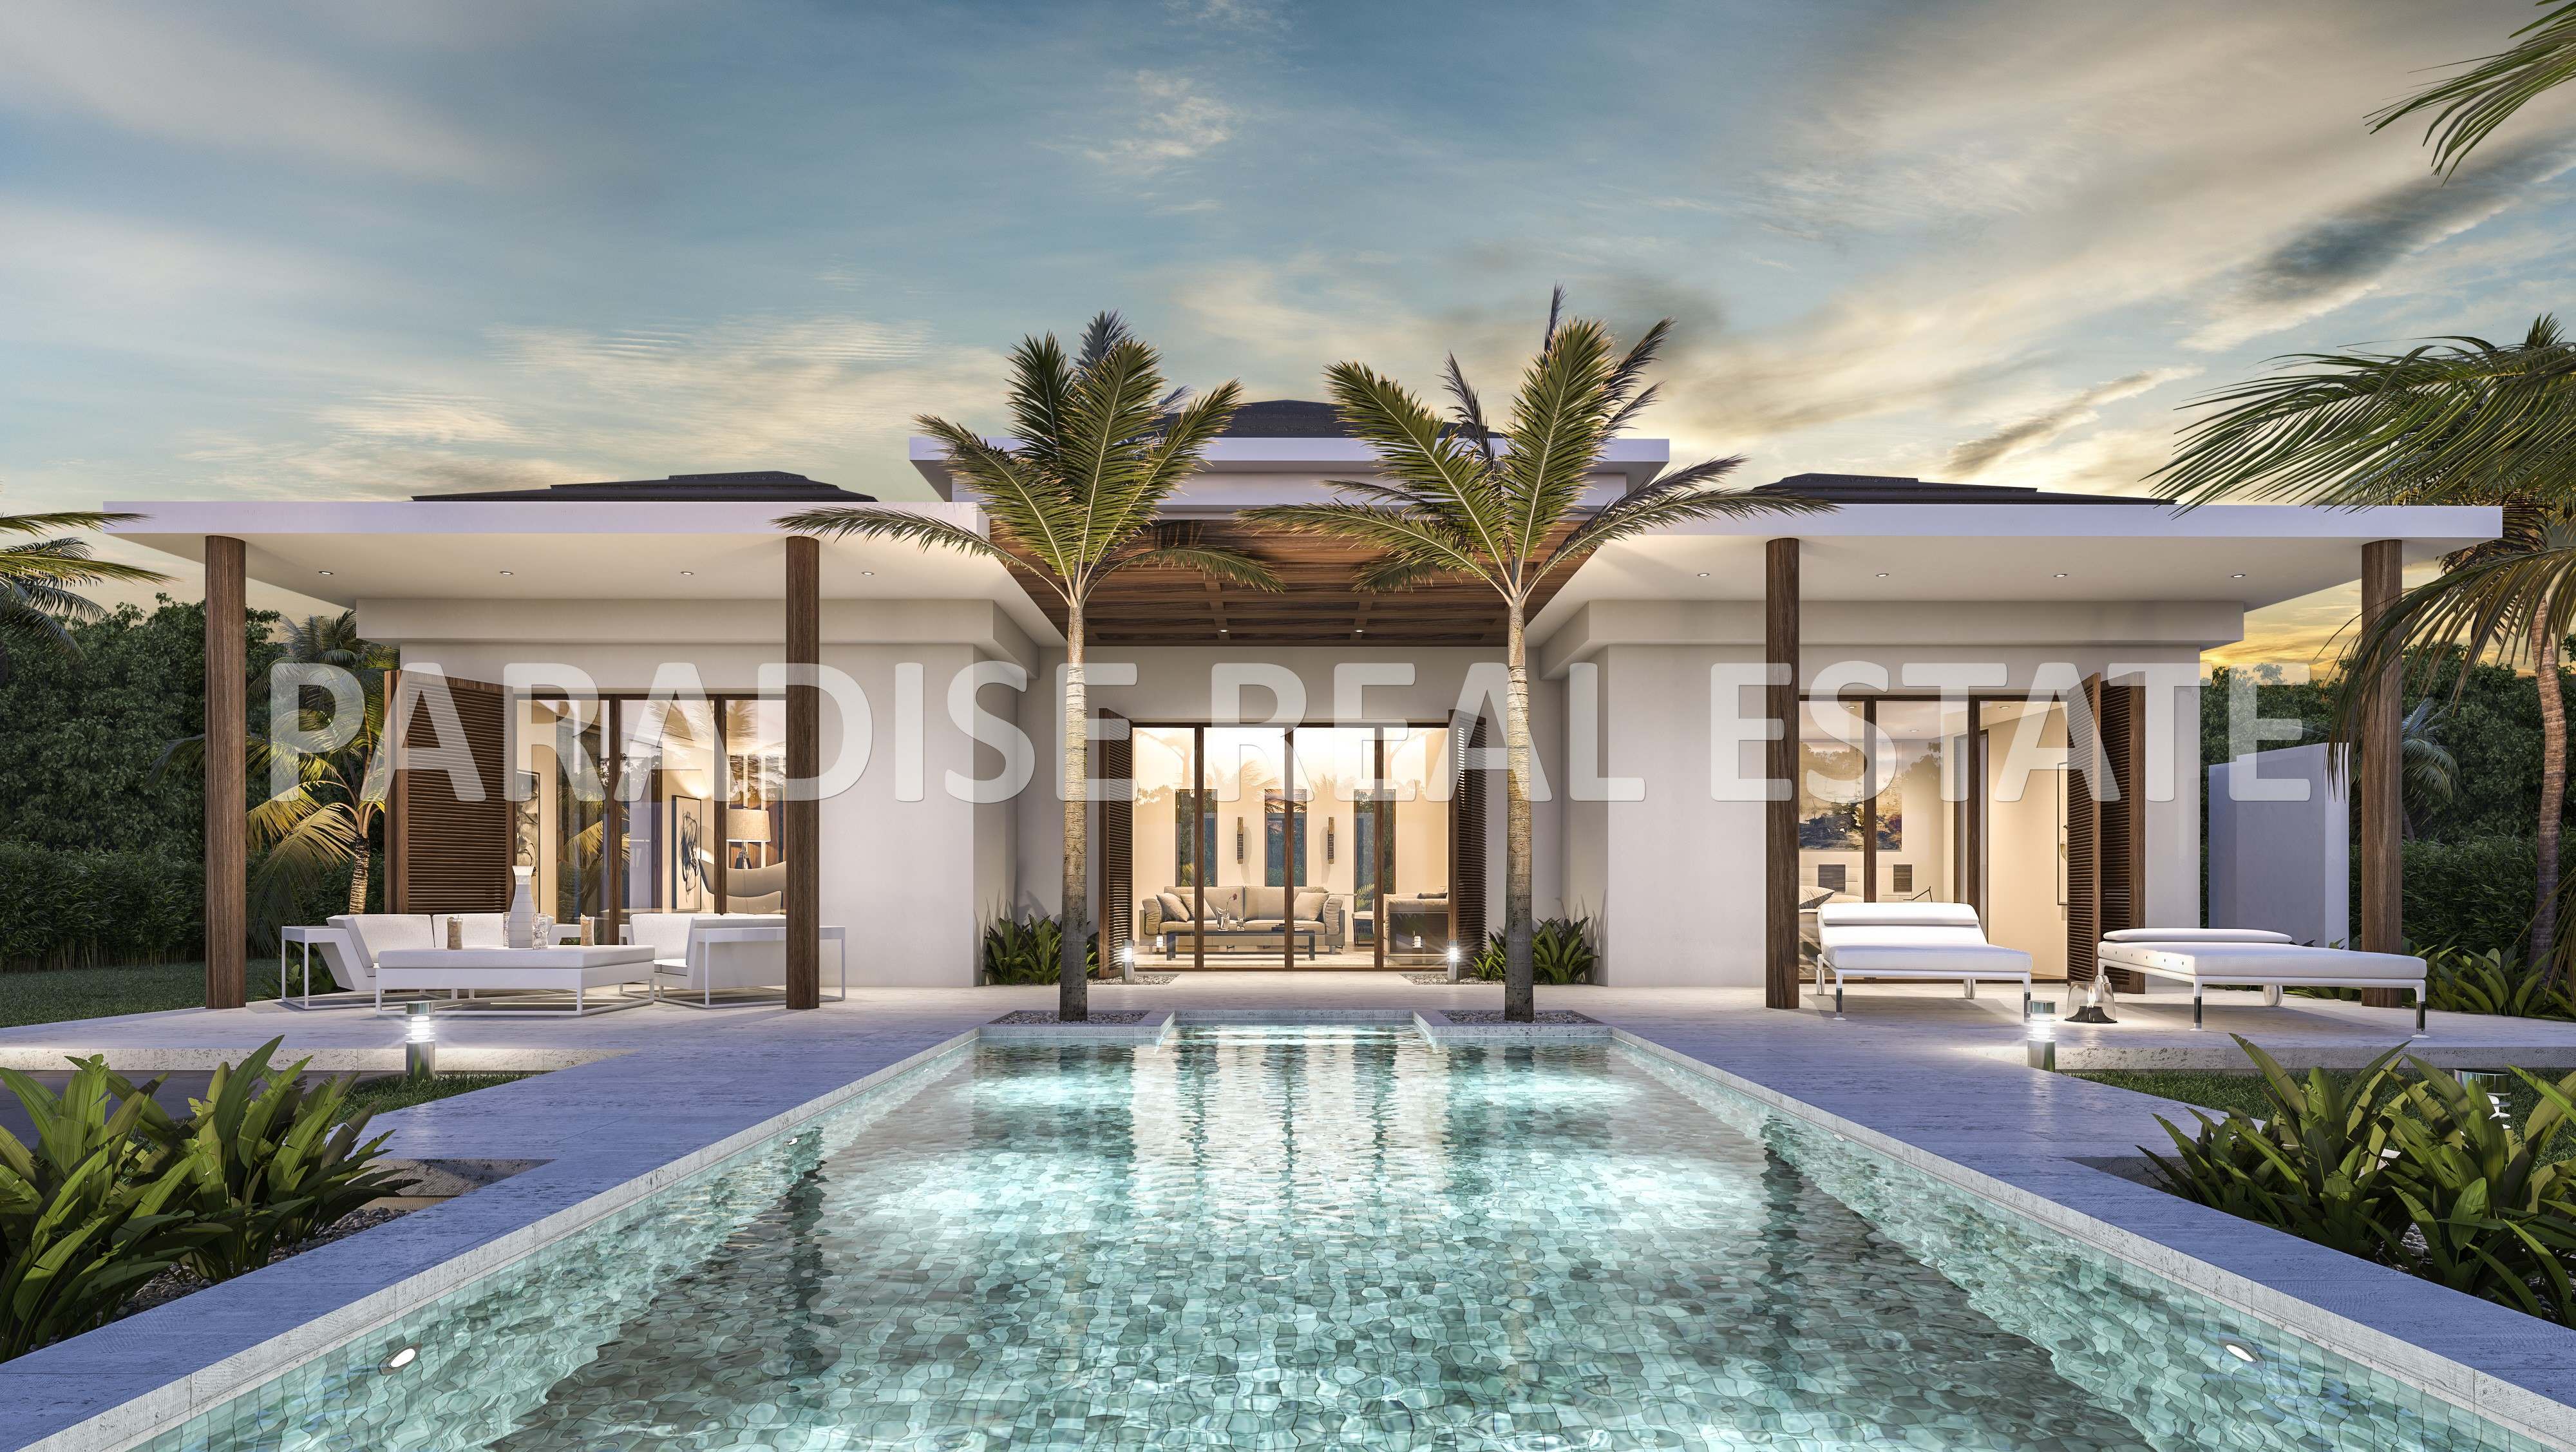 Villa te koop in La Cala, Javea in moderne luxe Balinese stijl.